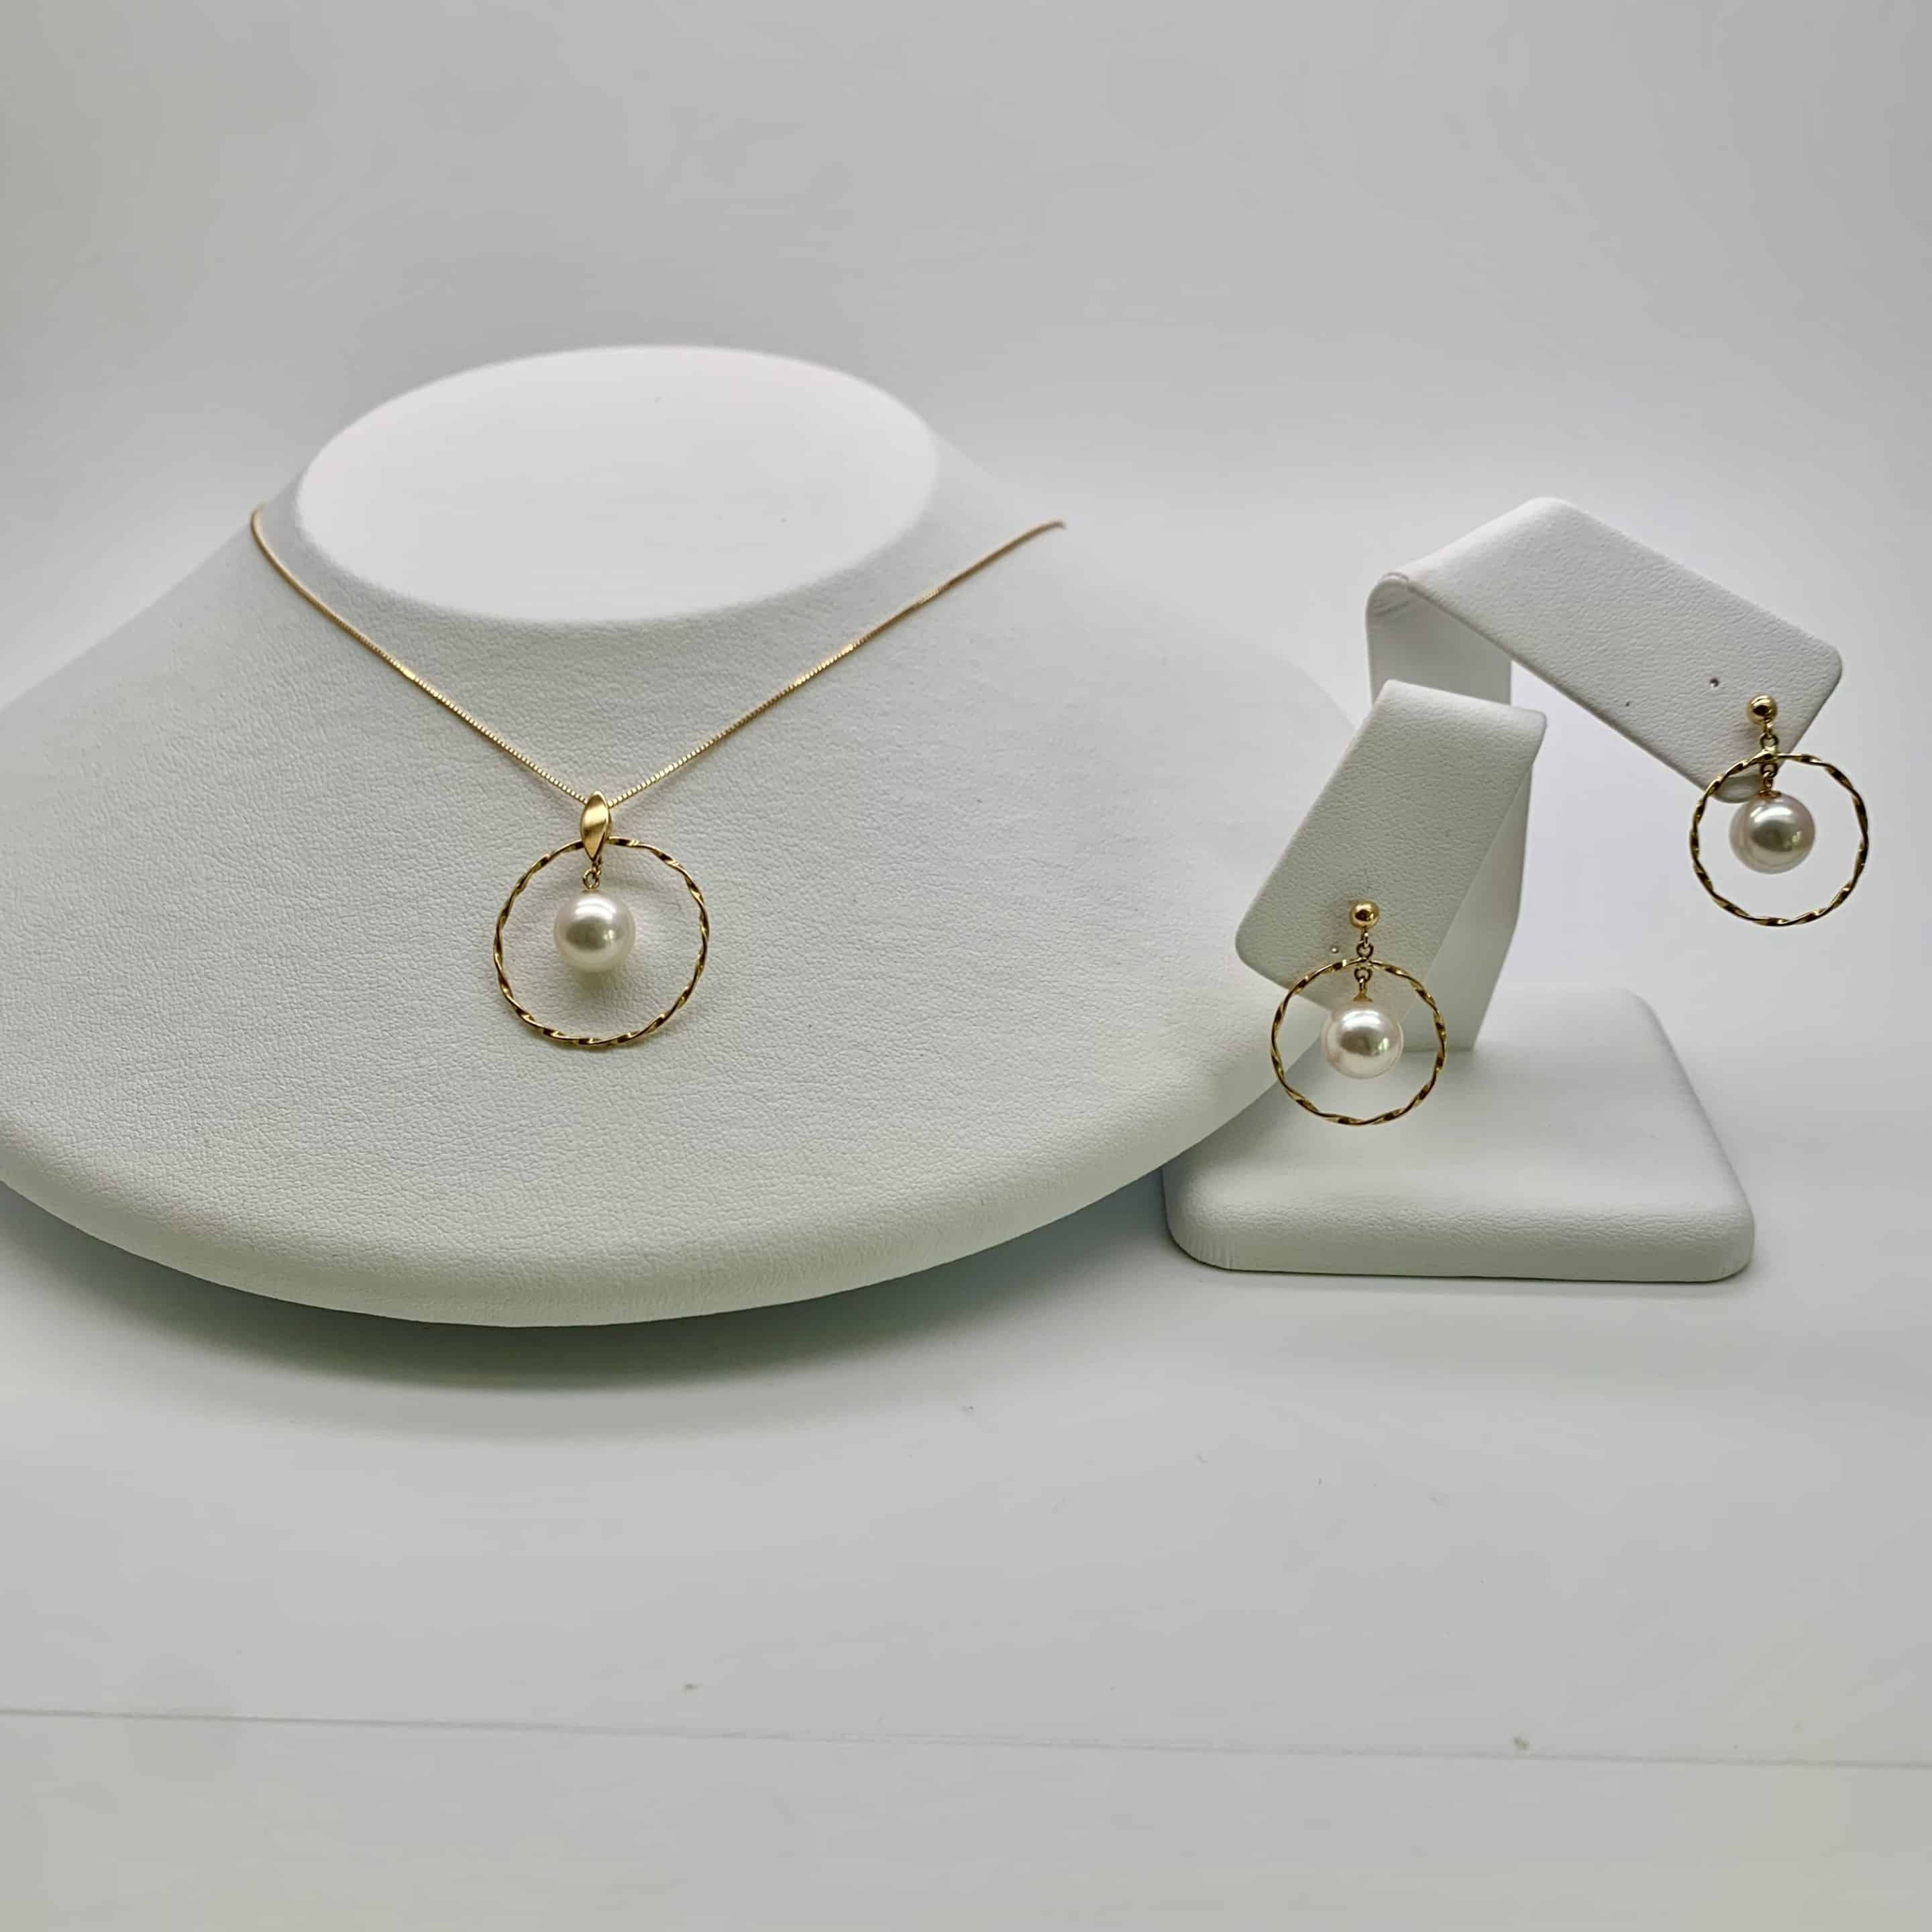 Akoya Pearl Pendant & Earrings $2300 - Luxury Pearl Jewelry Design